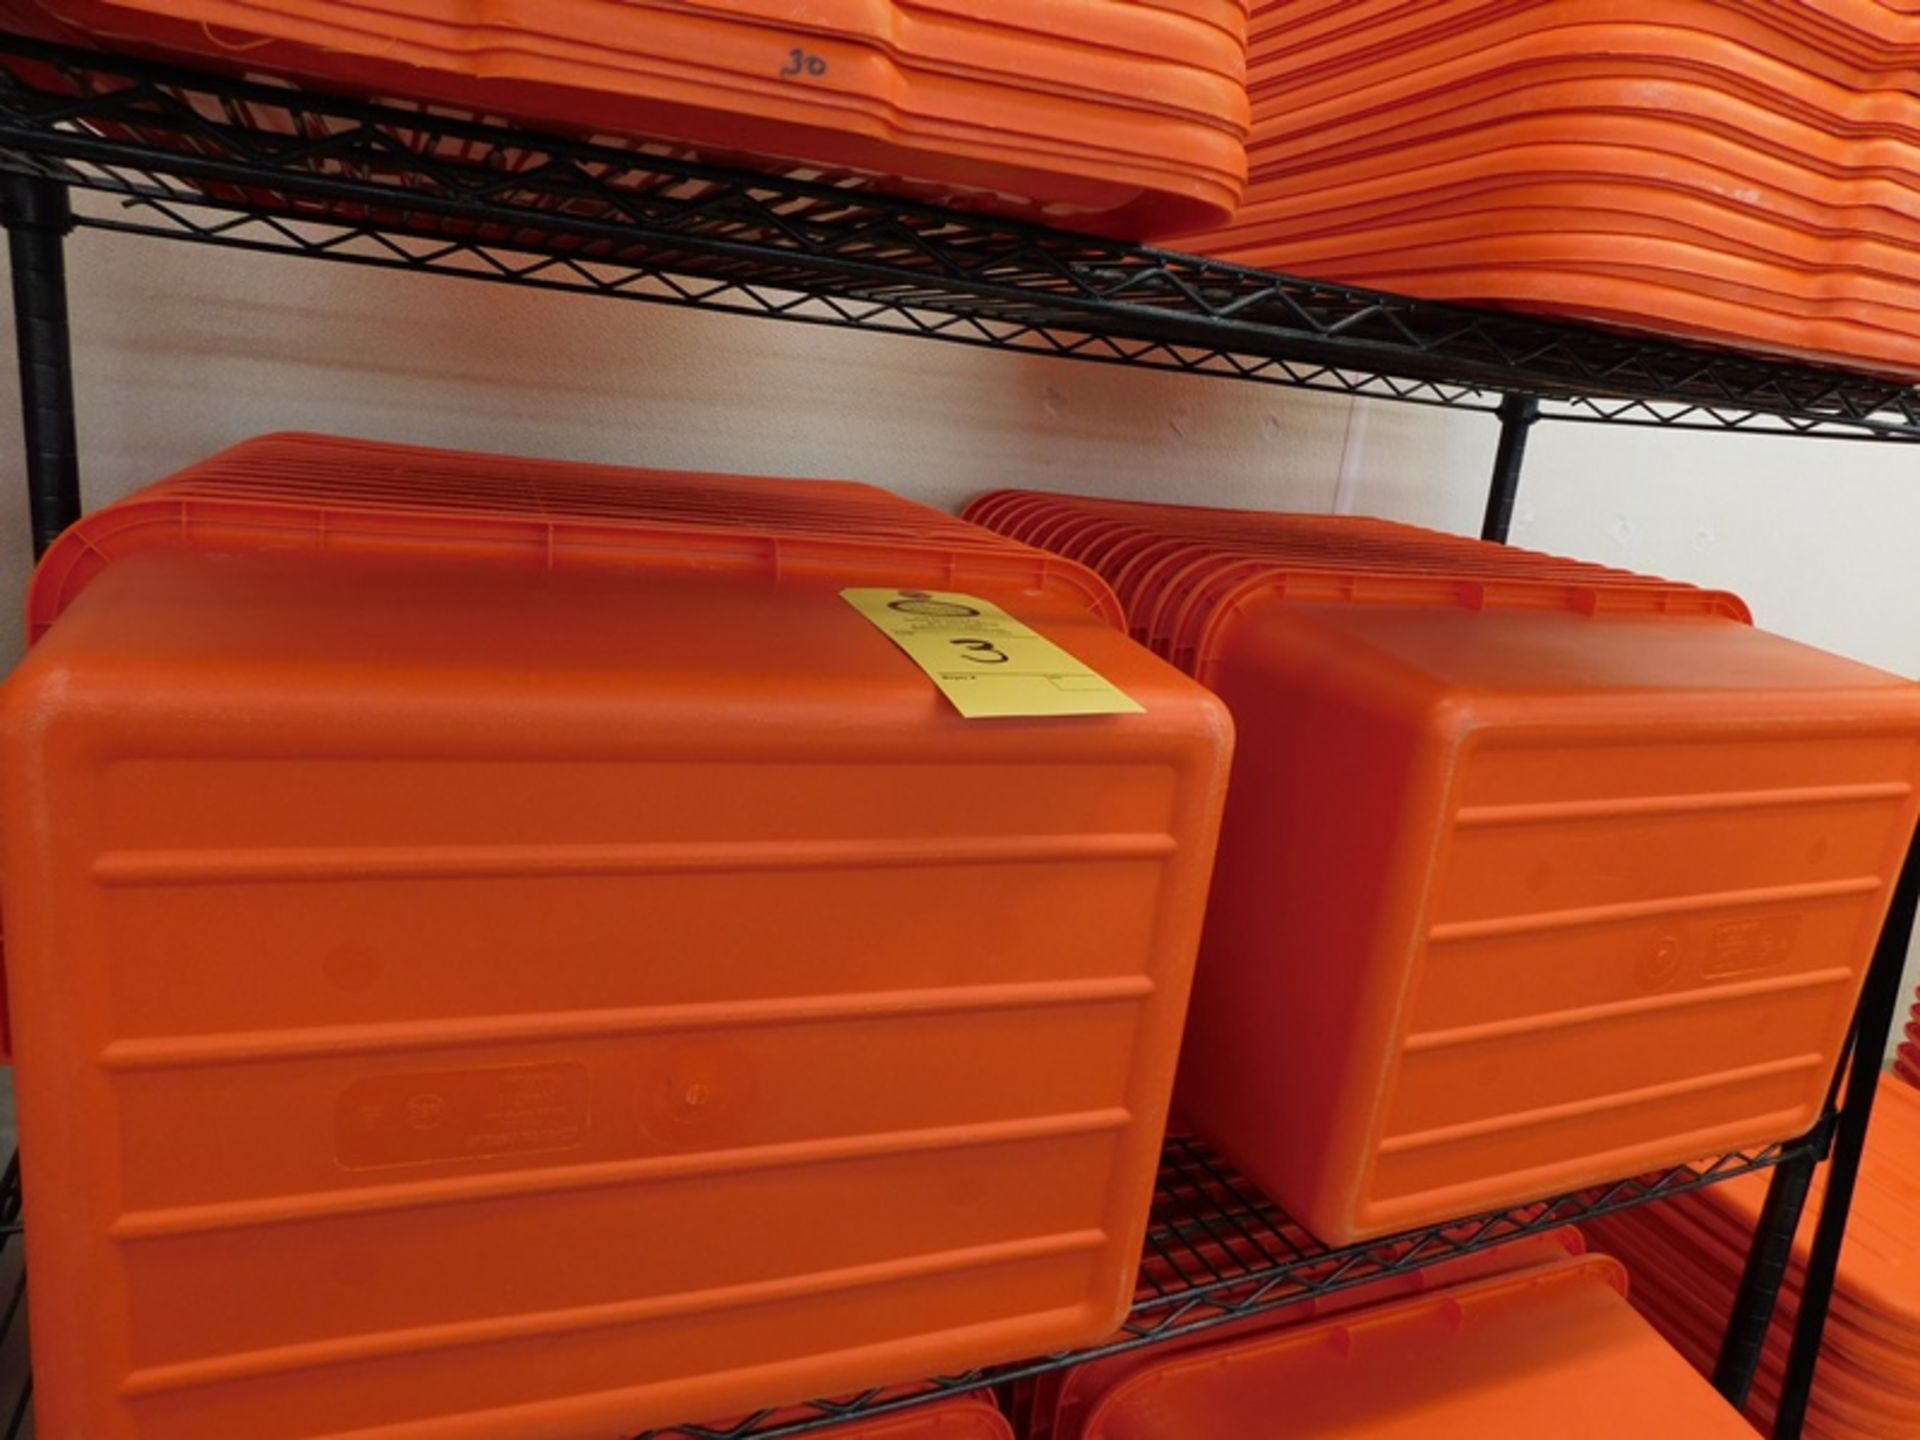 Carlisle Mdl. N44011 Red Plastic Totes, 18" X 14" X 7", with lids - (Loading Fee: $25.00 Nebraska